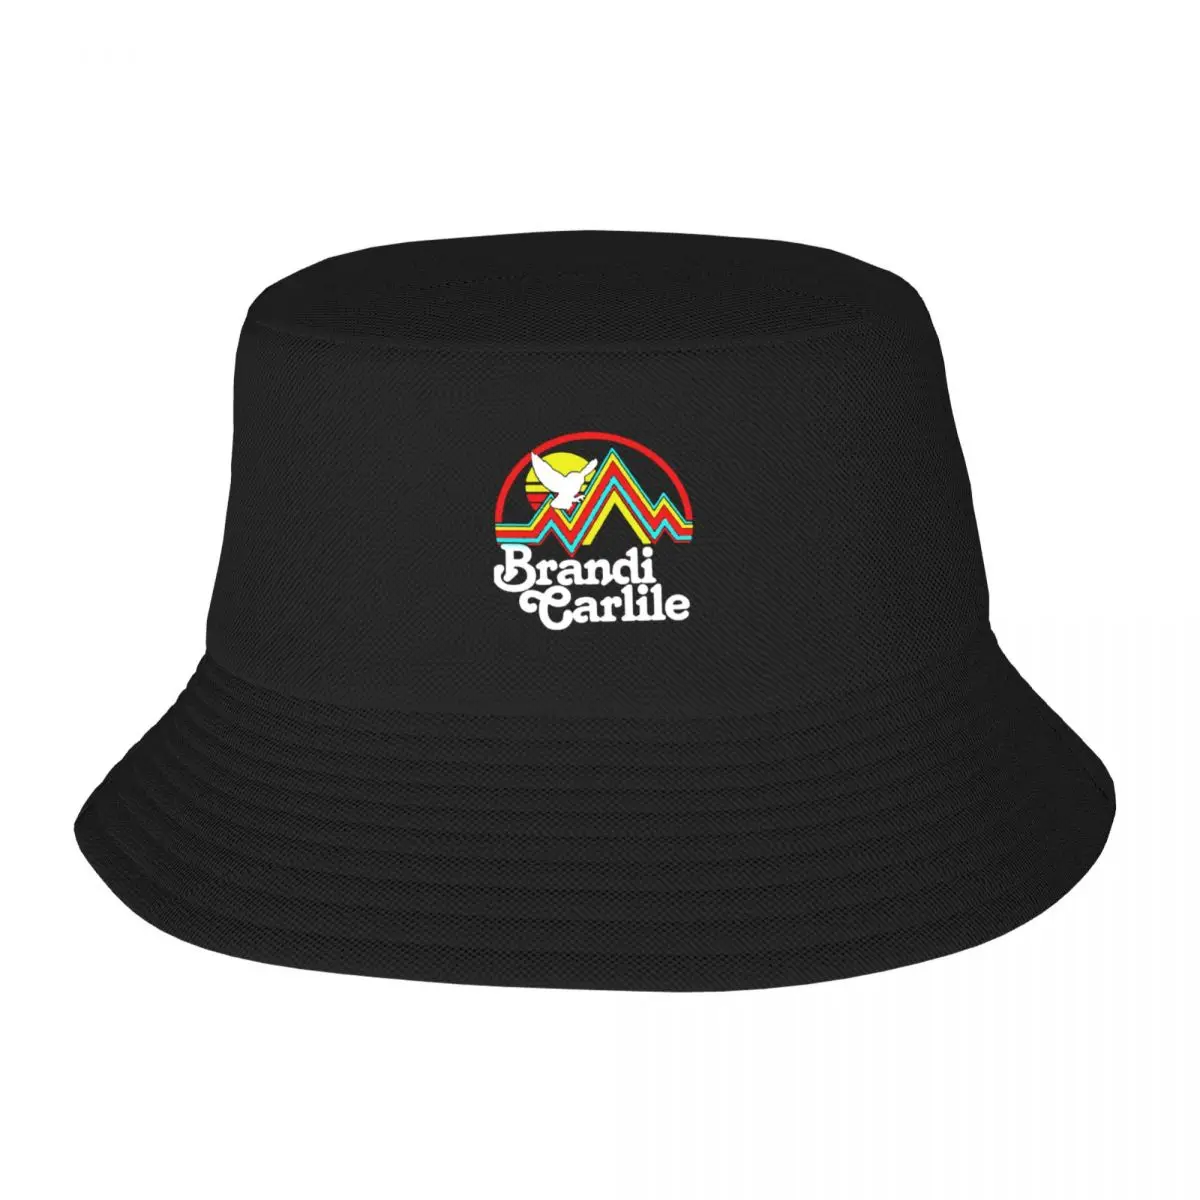 Новая шляпа-ведро Brandi carlile best music, новая мужская шляпа в шляпе, роскошная рейв-кепка для гольфа, женская пляжная распродажа 2023, мужская кепка